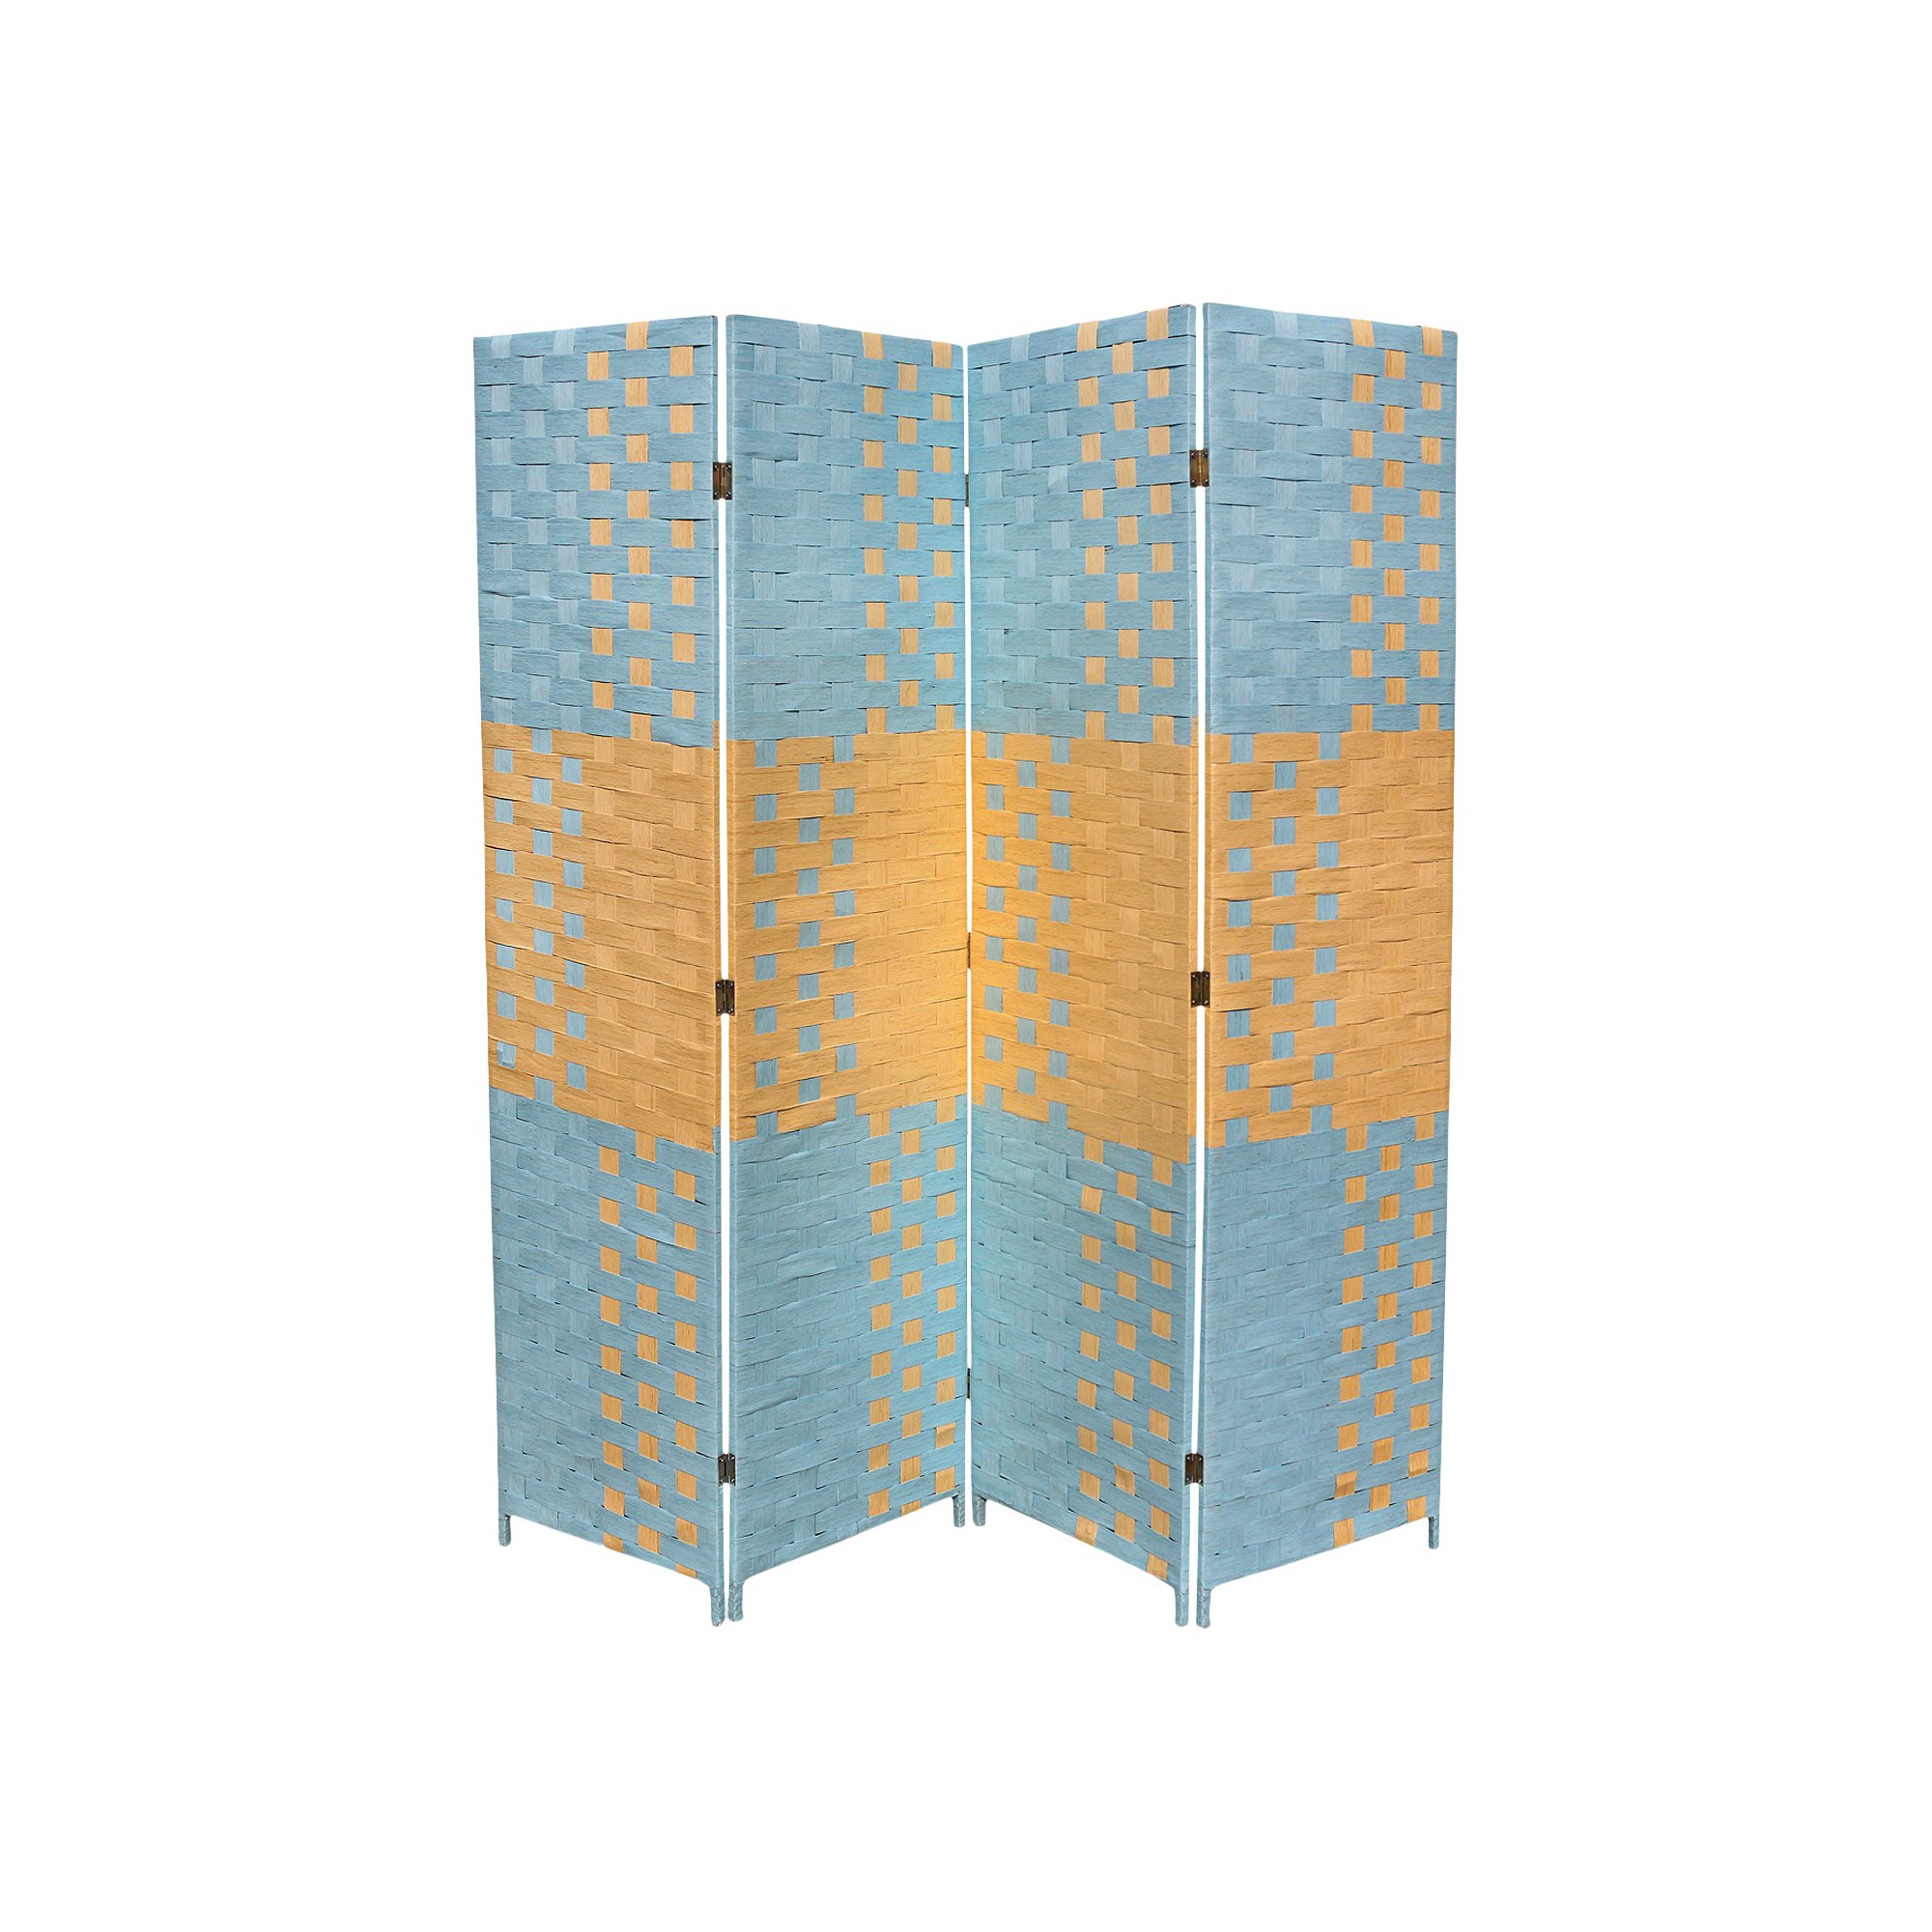 '4 Panel Paper Straw Weave Screen on 2'' Legs - Ore International, Blue'